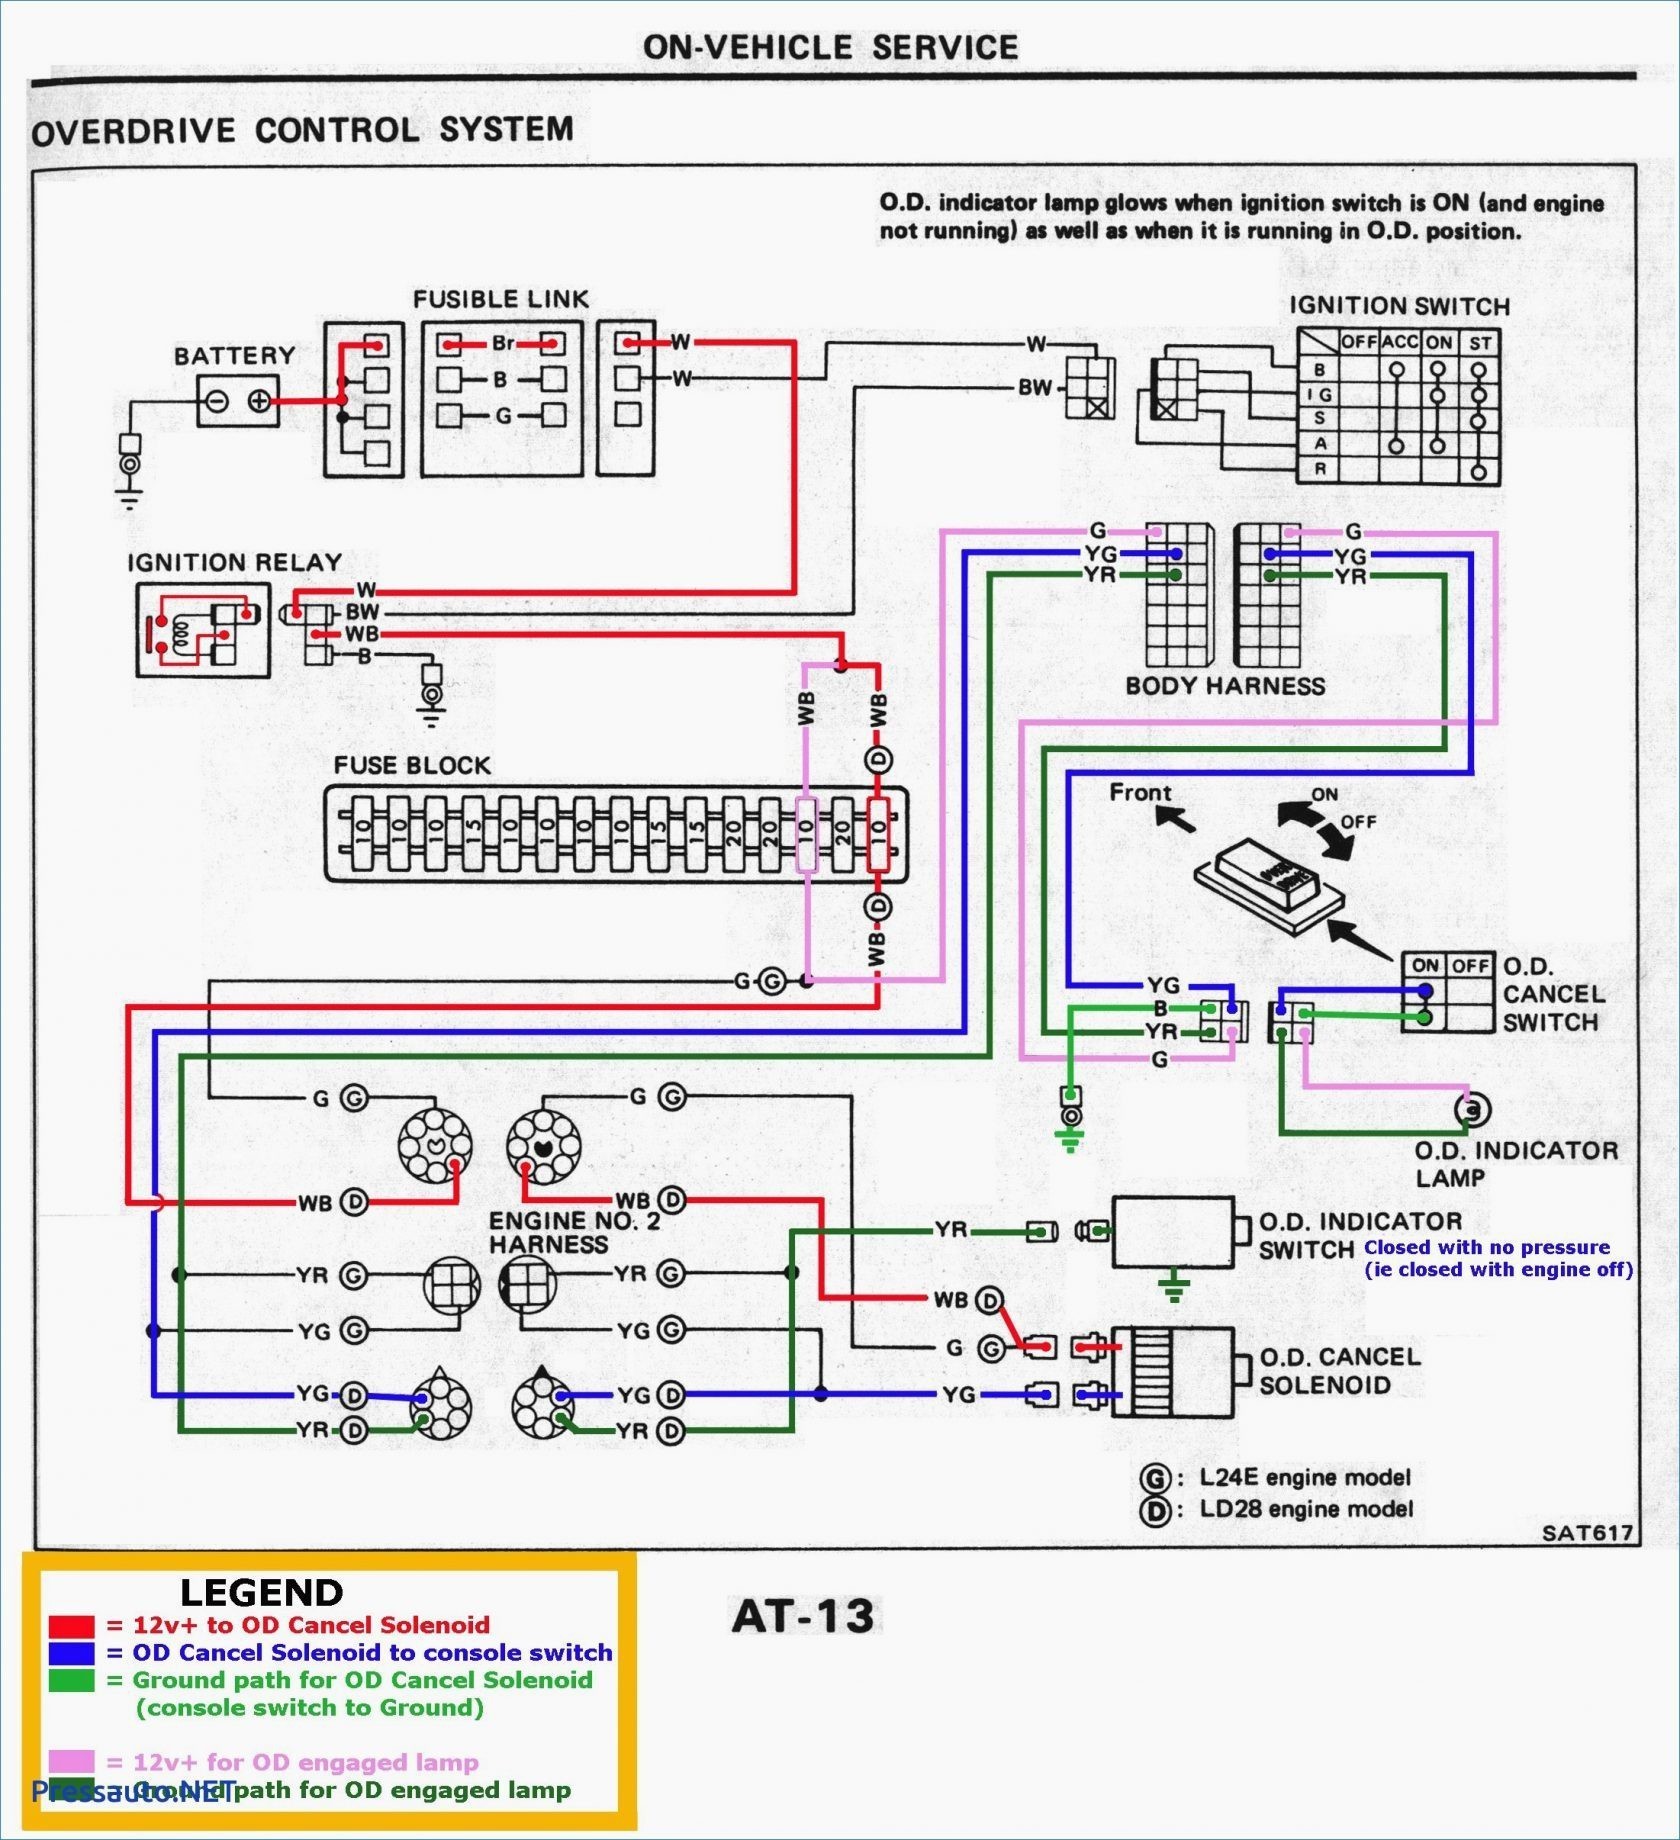 Mercruiser Engine Parts Diagram Bmw X5 E53 Parts Diagram Wiring Diagram Inside Of Mercruiser Engine Parts Diagram